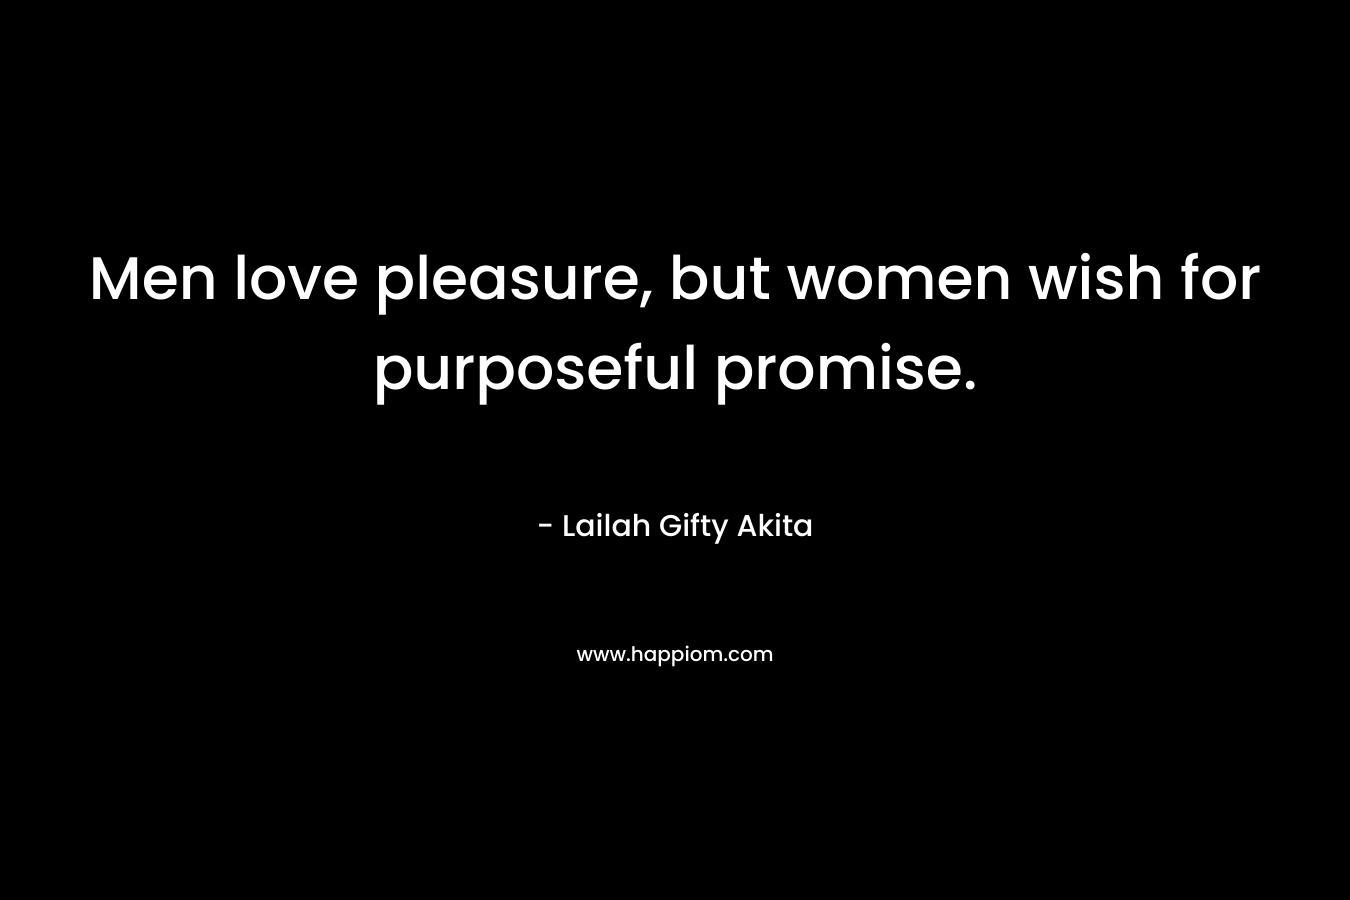 Men love pleasure, but women wish for purposeful promise.